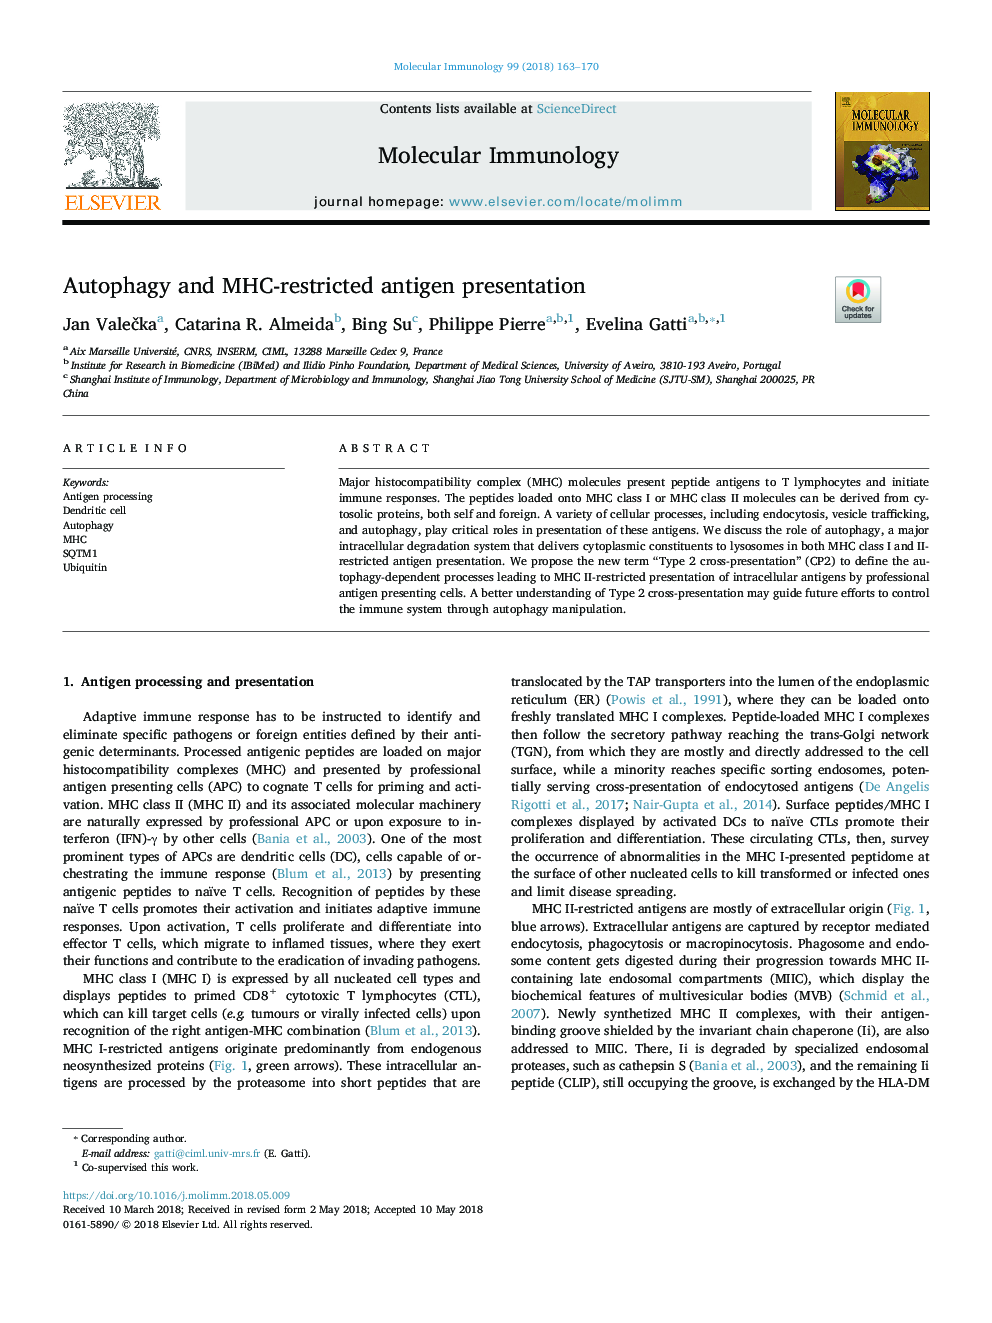 Autophagy and MHC-restricted antigen presentation